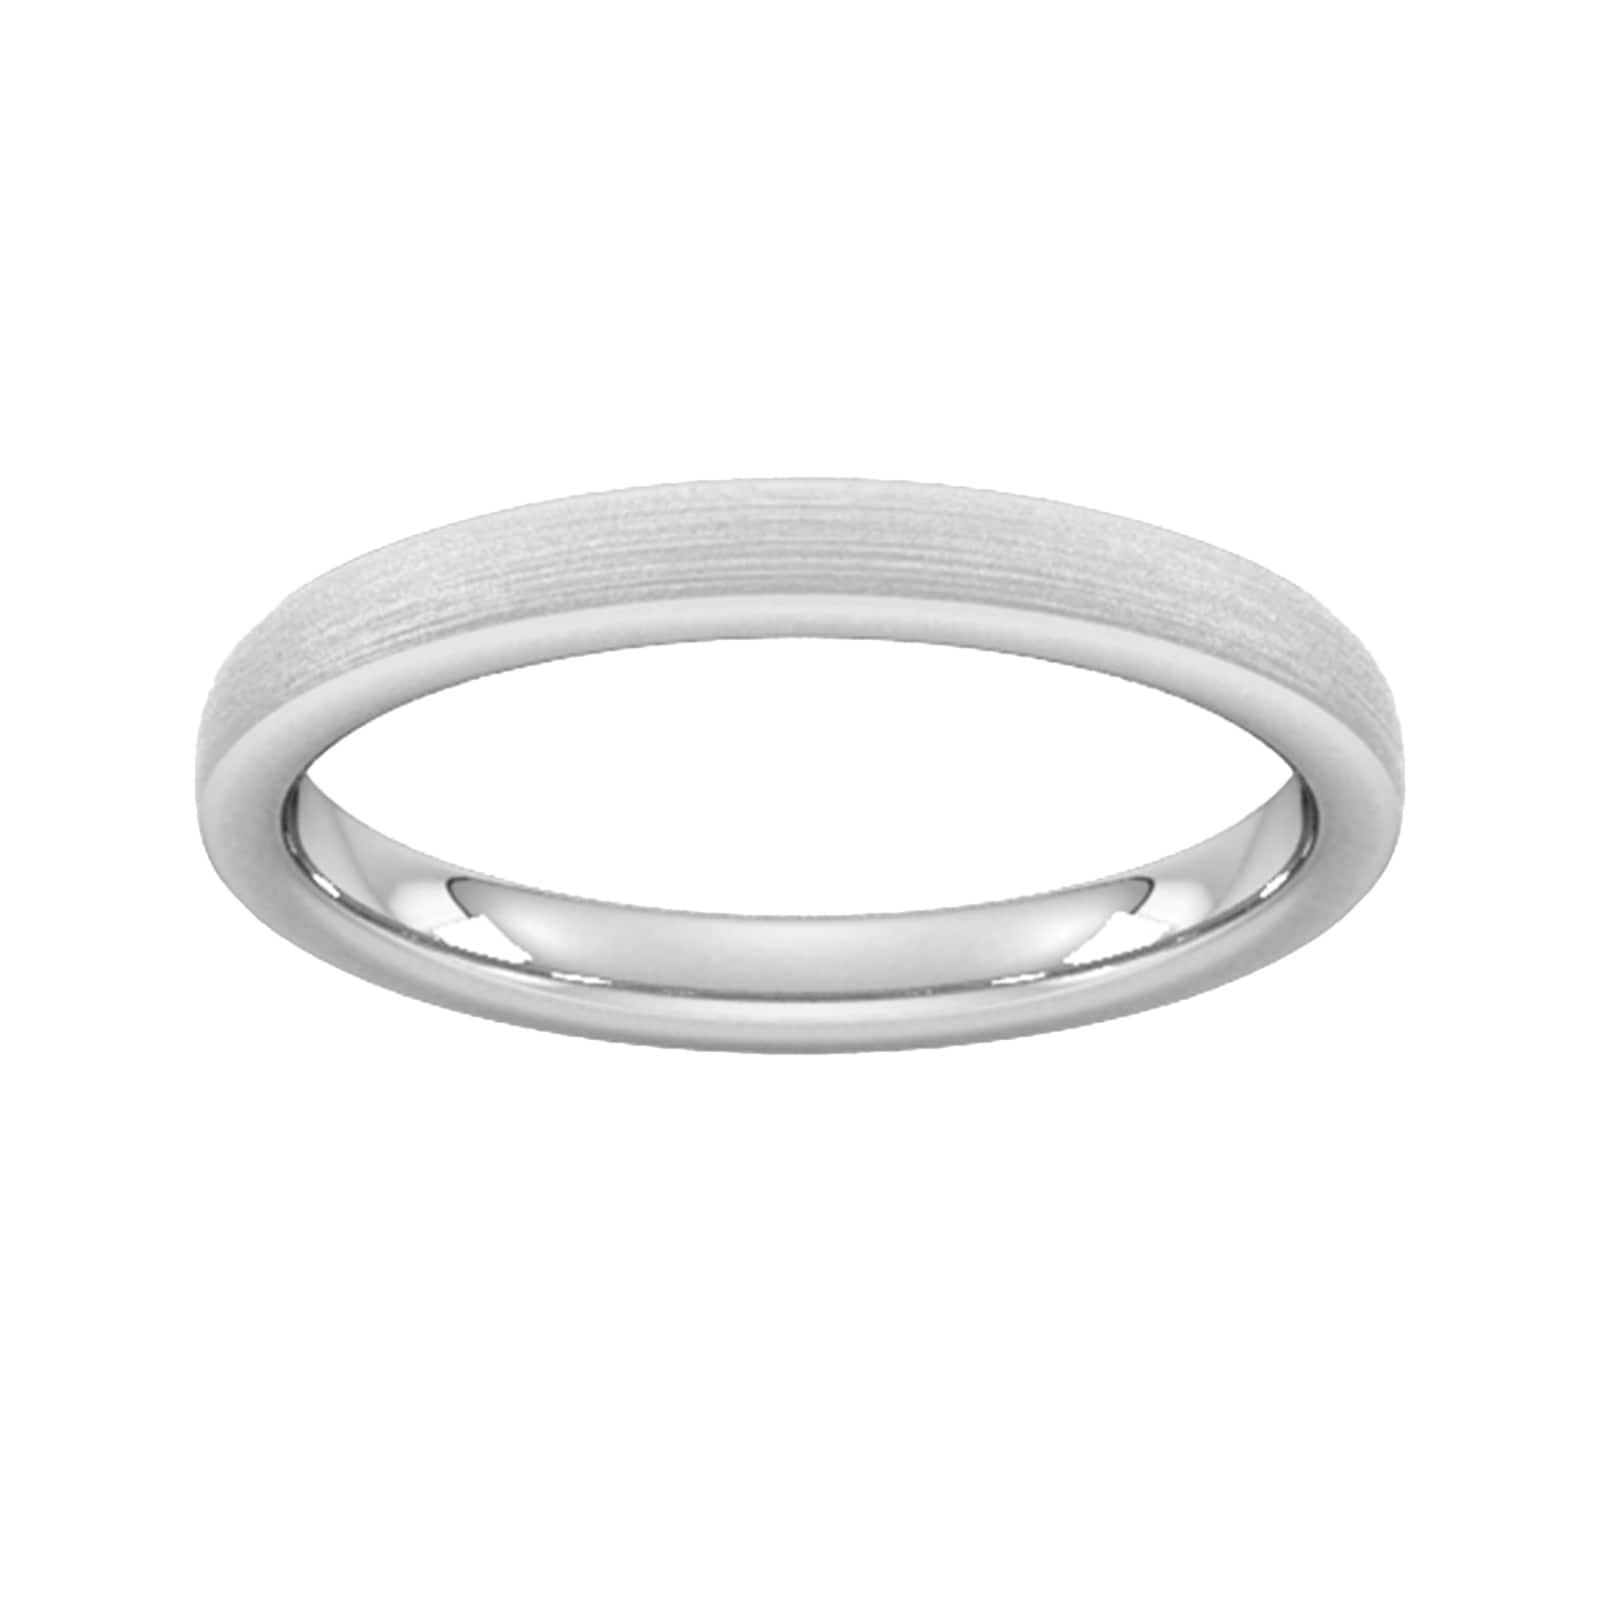 2.5mm Slight Court Standard Polished Chamfered Edges With Matt Centre Wedding Ring In 950 Palladium - Ring Size K